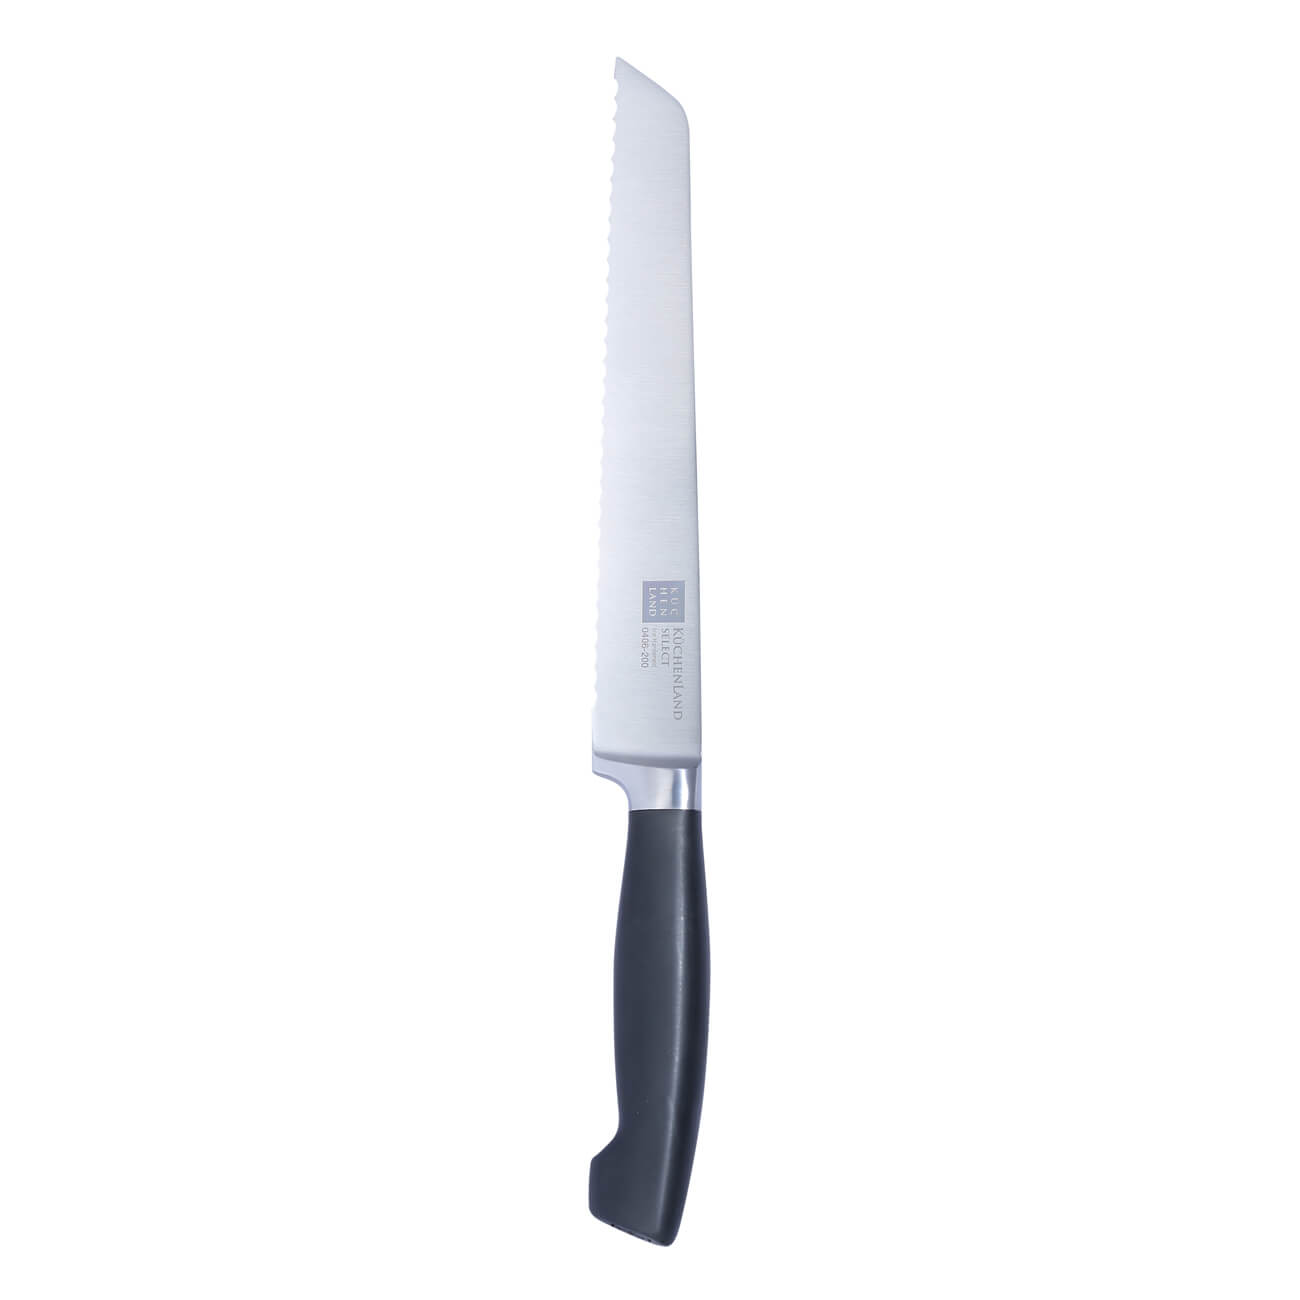 Kuchenland Нож хлебный, 20 см, сталь/пластик, Select